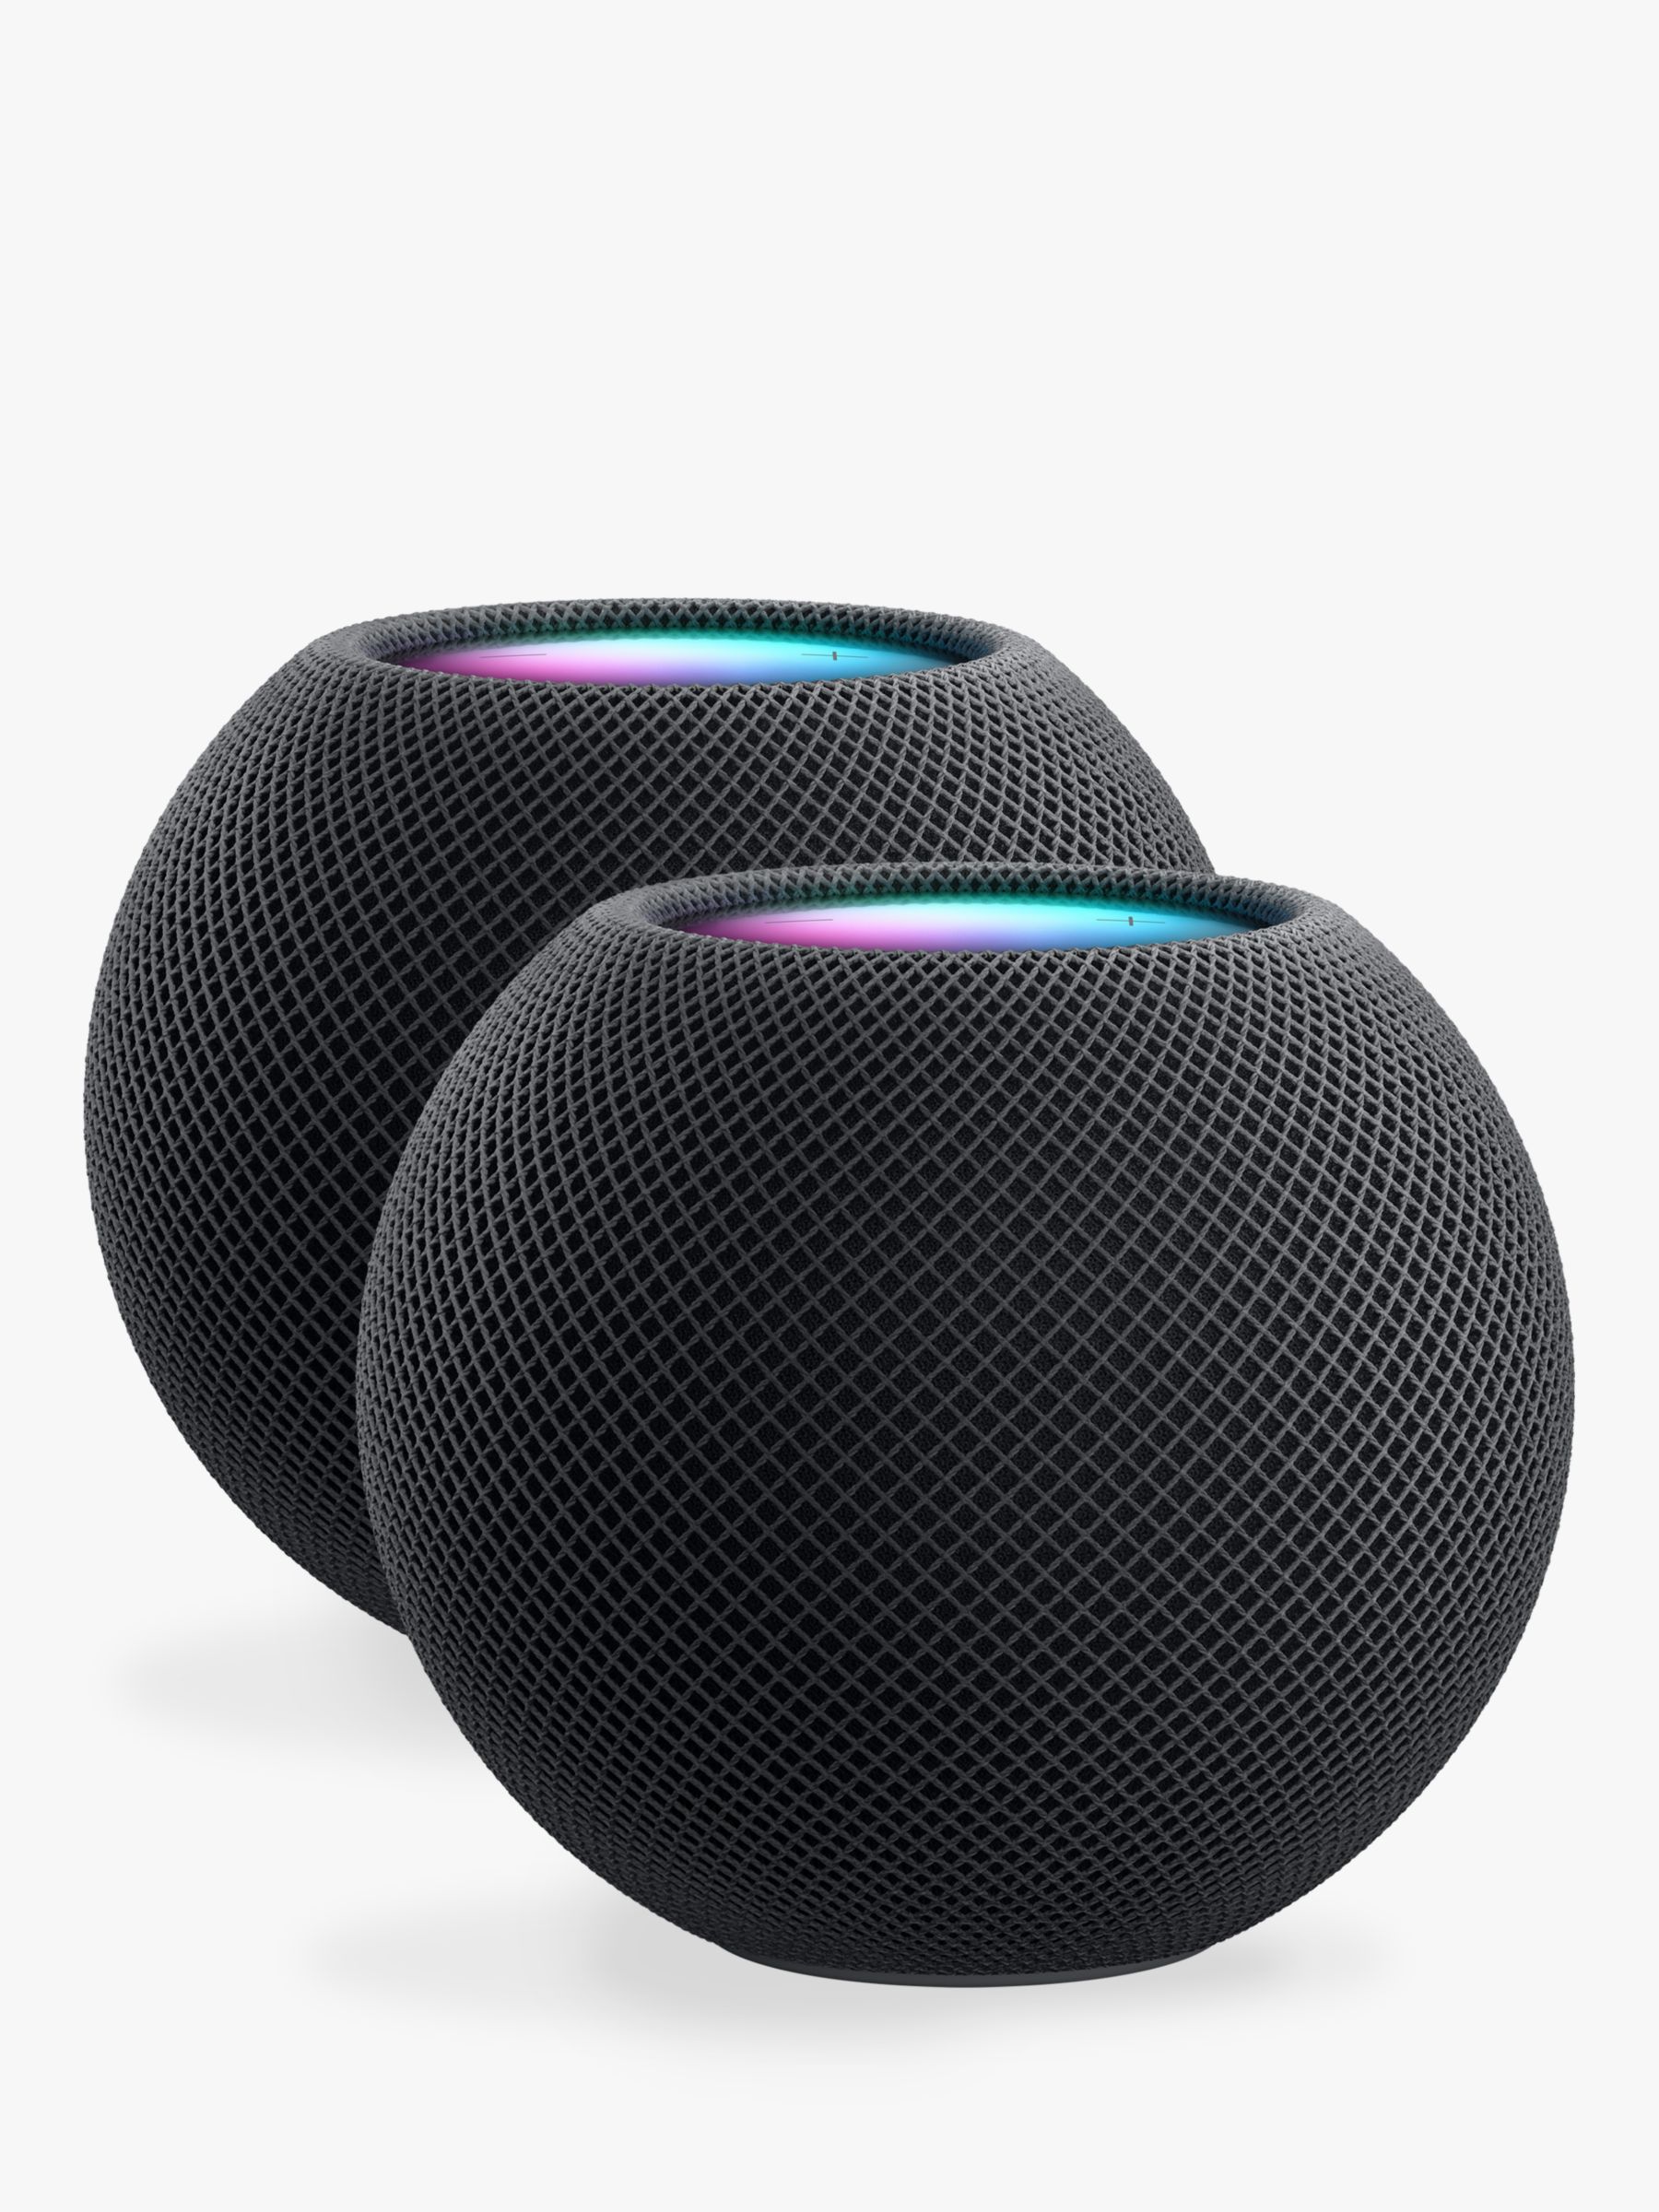 Apple HomePod mini Smart Speaker, Space Grey, 2 Pack (2 Speaker Bundle)